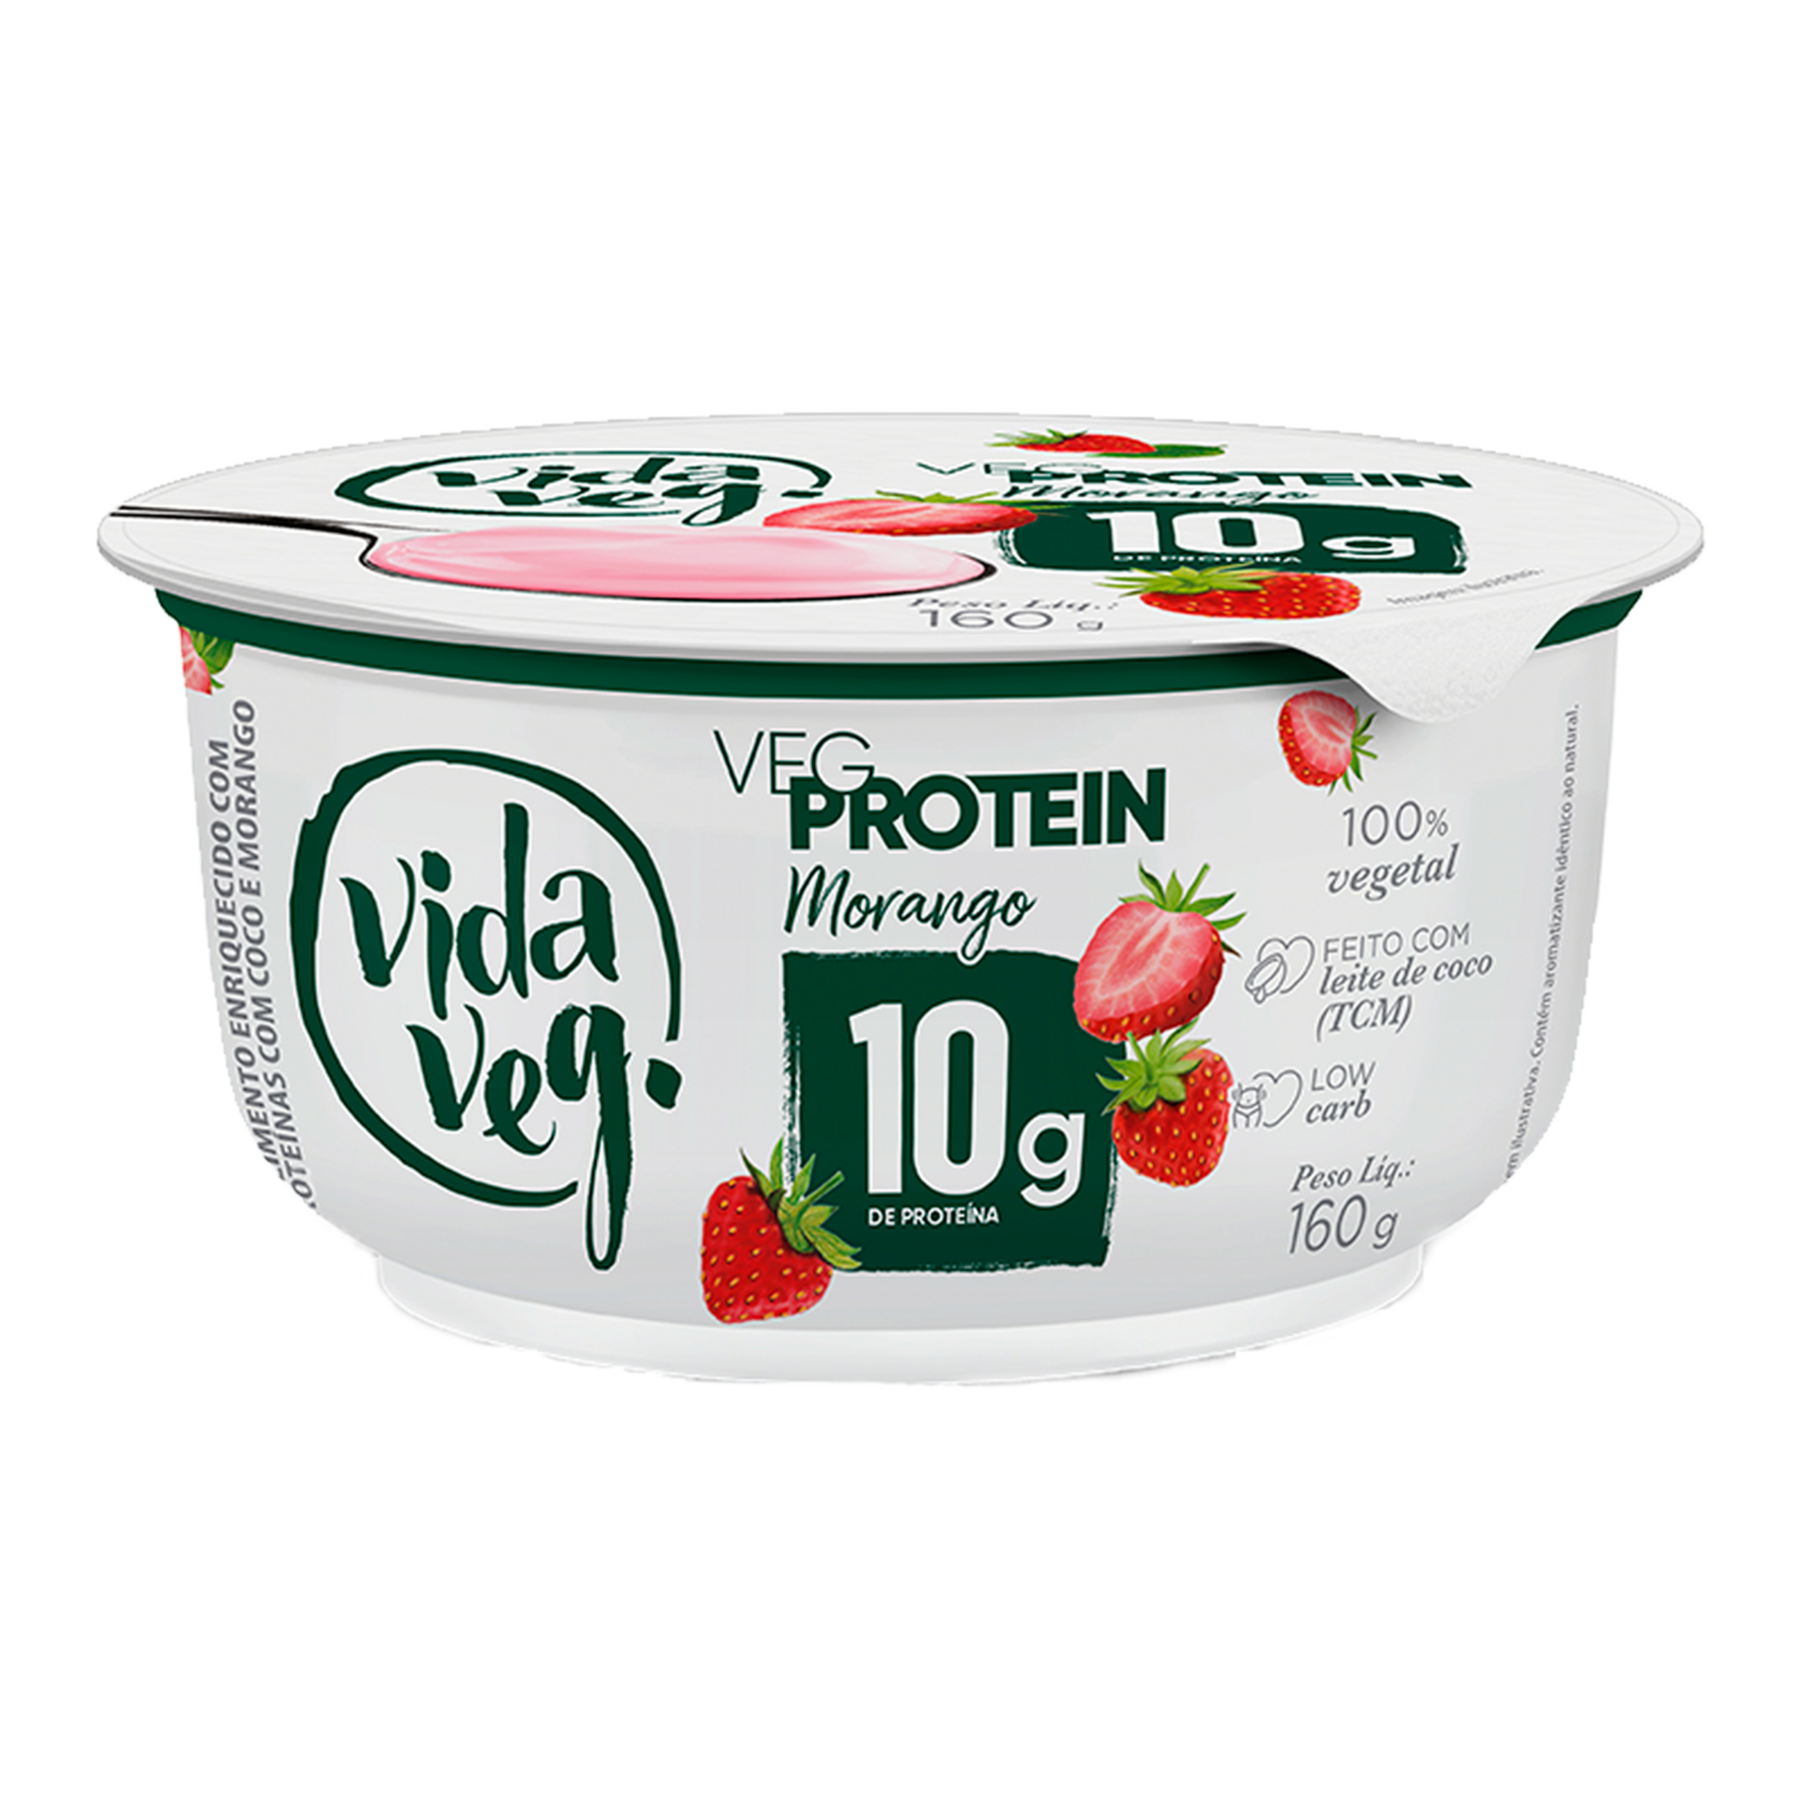 Iogurte Veg Protein Morango Vida Veg Pote 160g